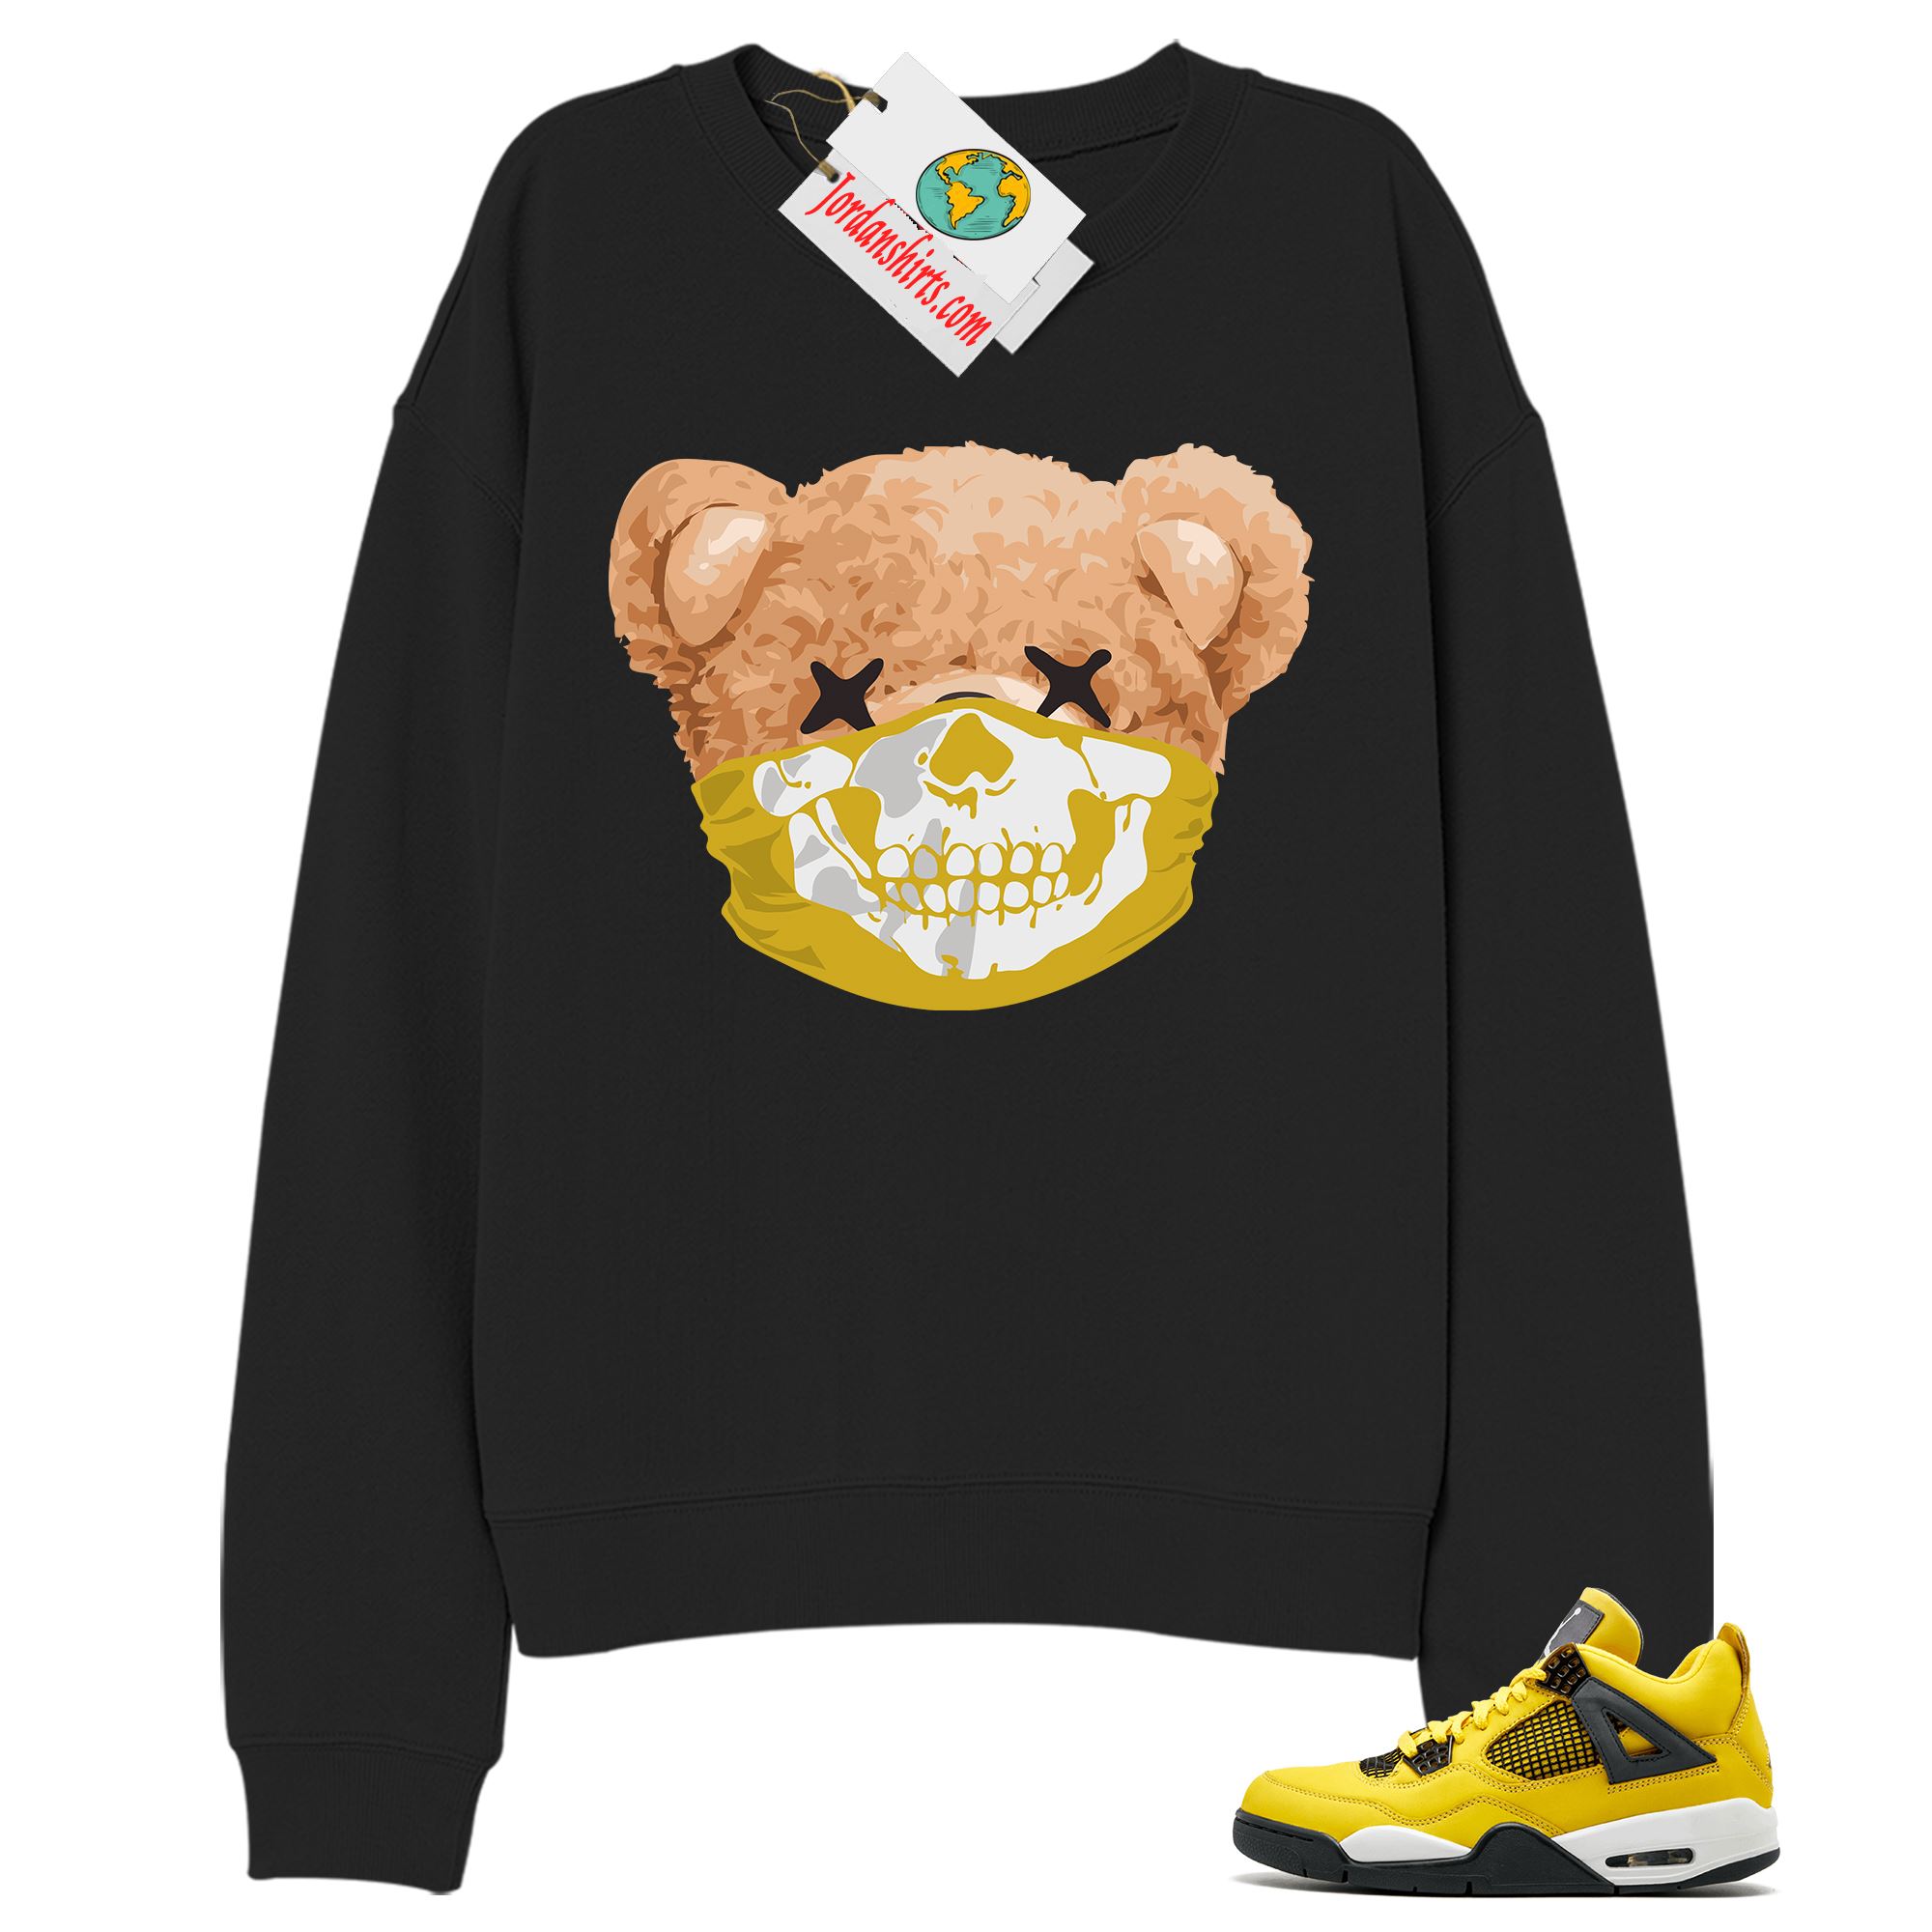 Jordan 4 Sweatshirt, Teddy Bear Skull Bandana Black Sweatshirt Air Jordan 4 Tour Yellow Lightning 4s Plus Size Up To 5xl